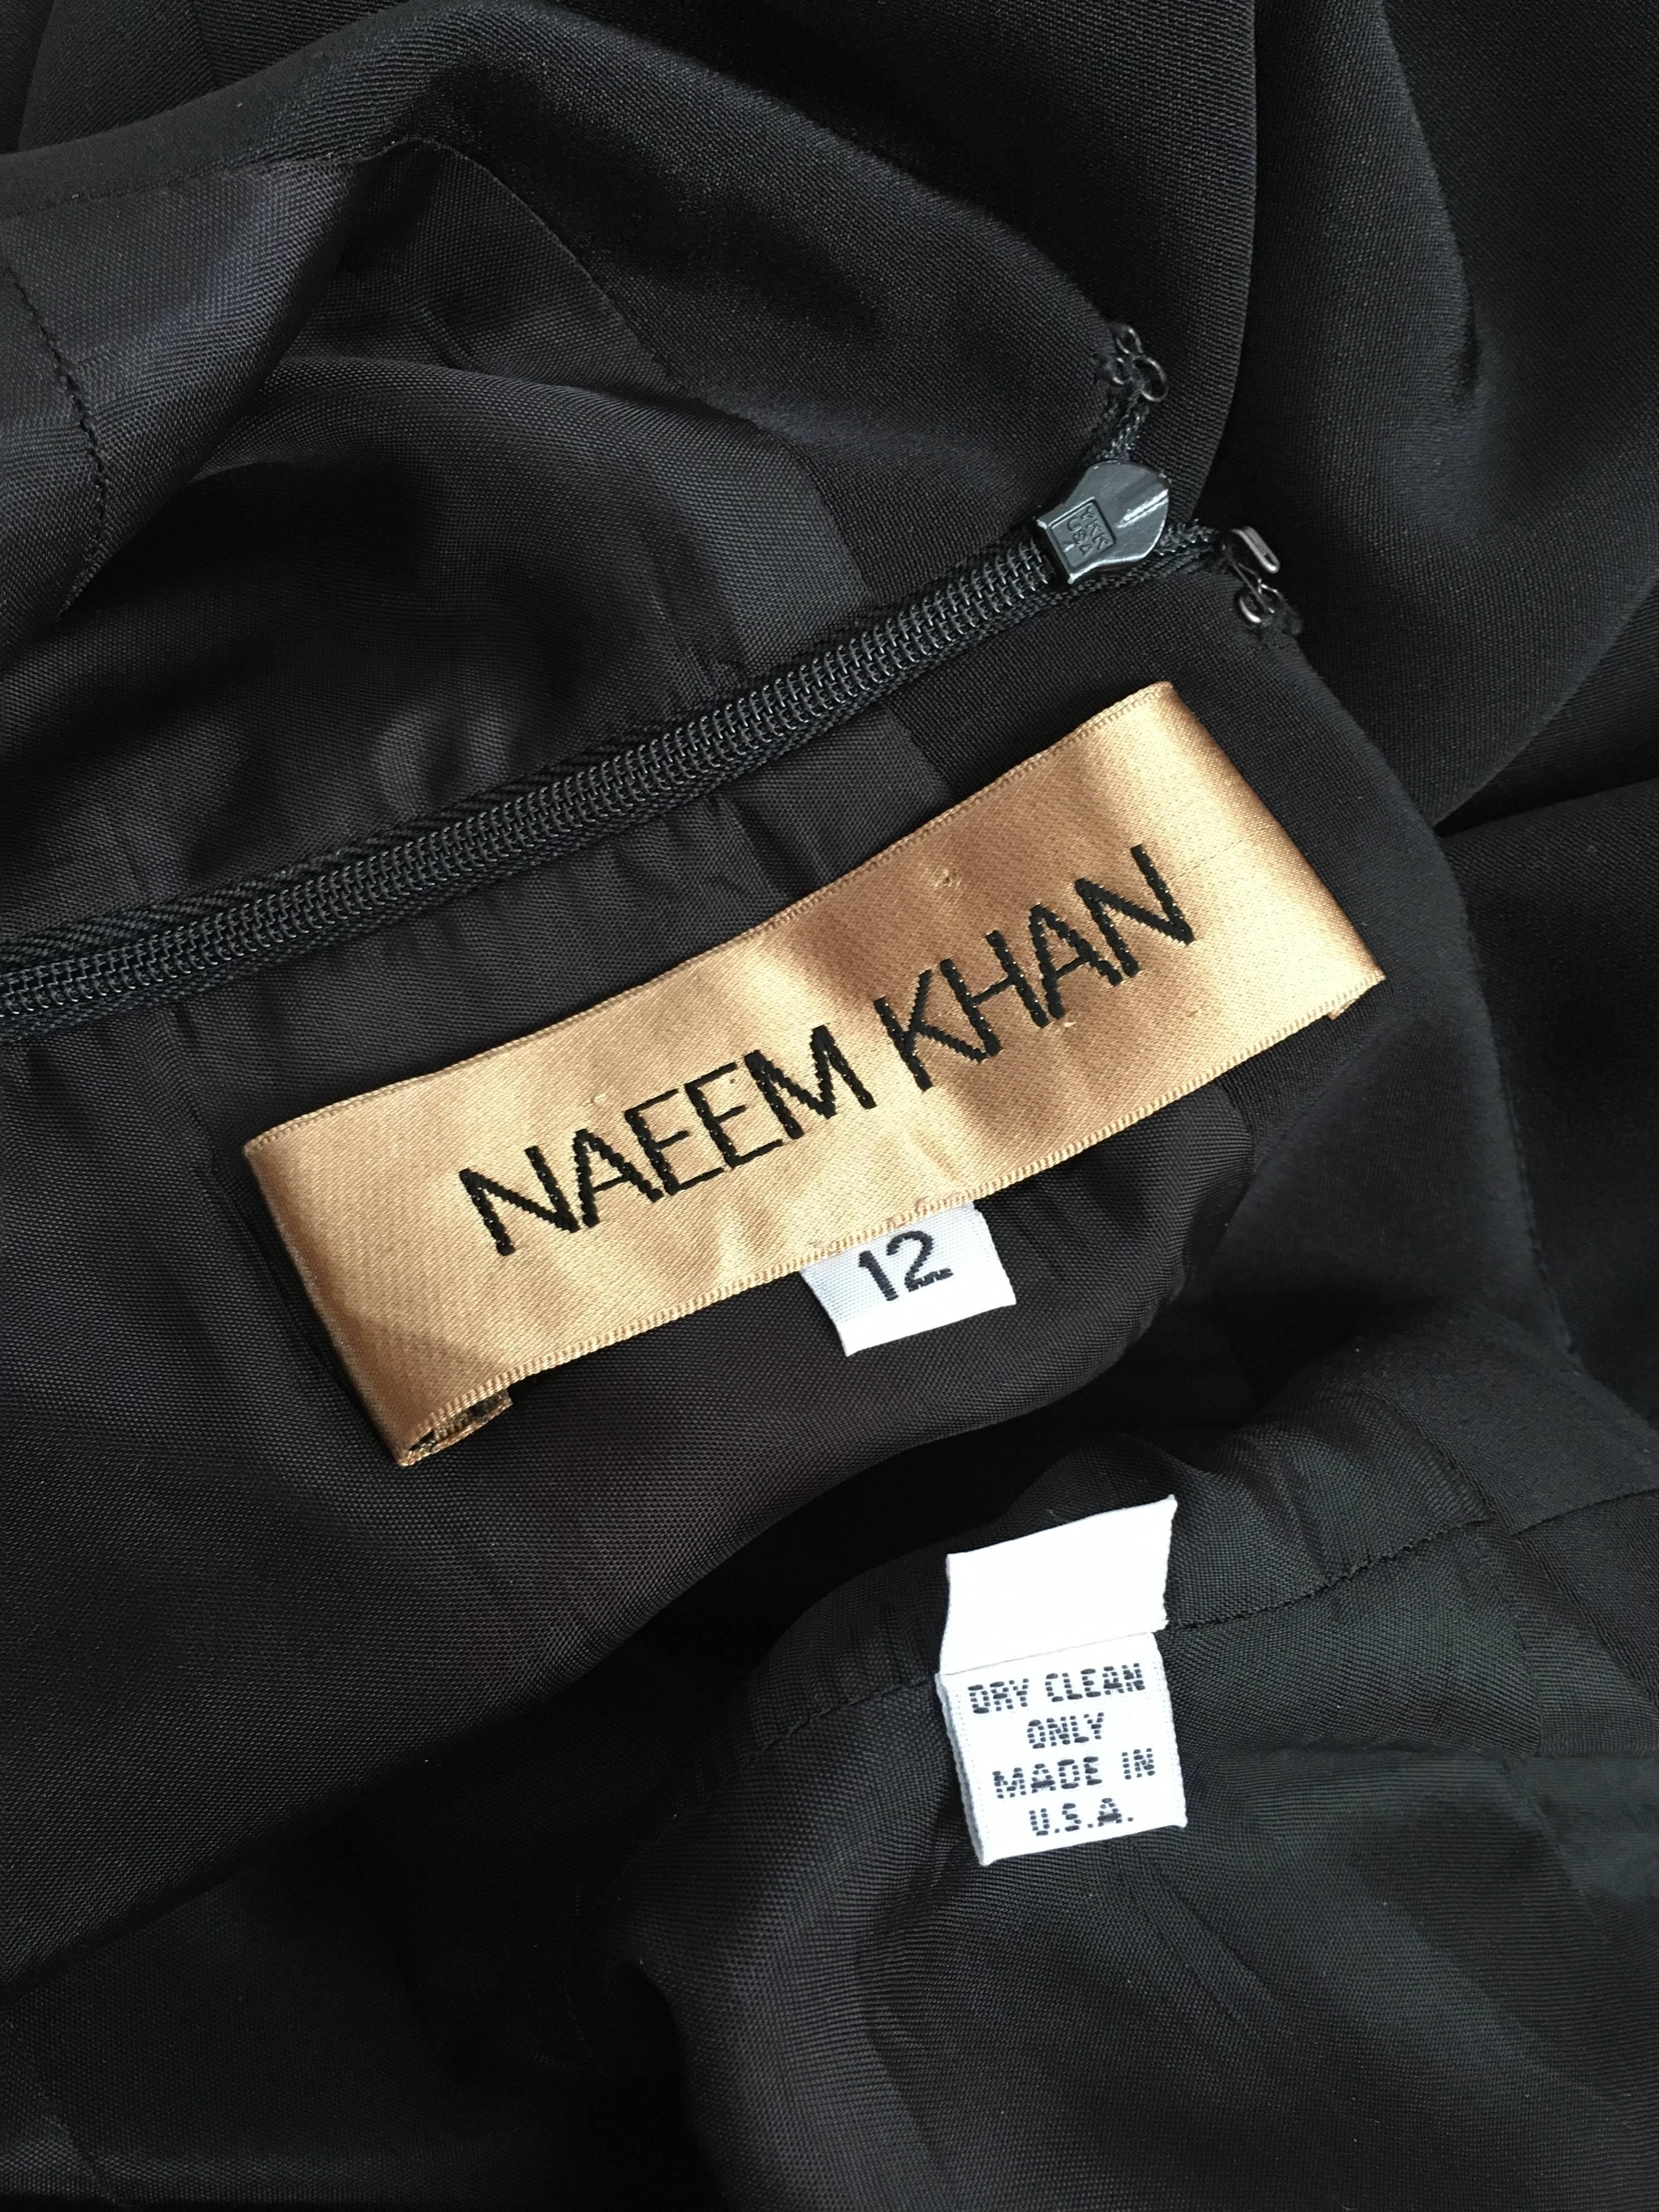 Naeem Khan Black Silk Spaghetti Strap Evening Maxi Dress Size 12.  For Sale 5